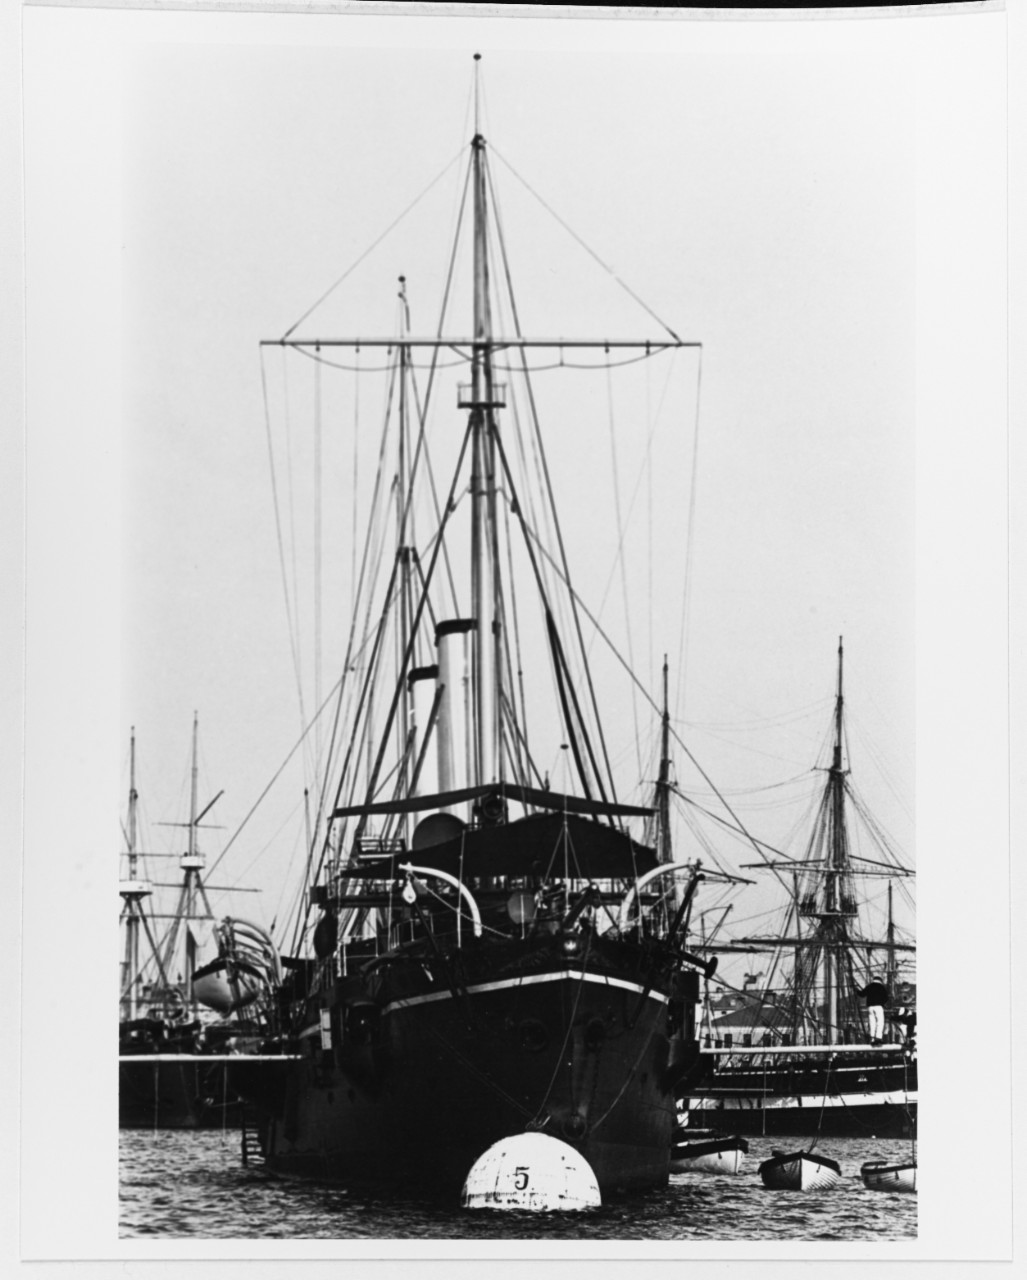 LEOPARD Austrian Cruiser, 1885-1920